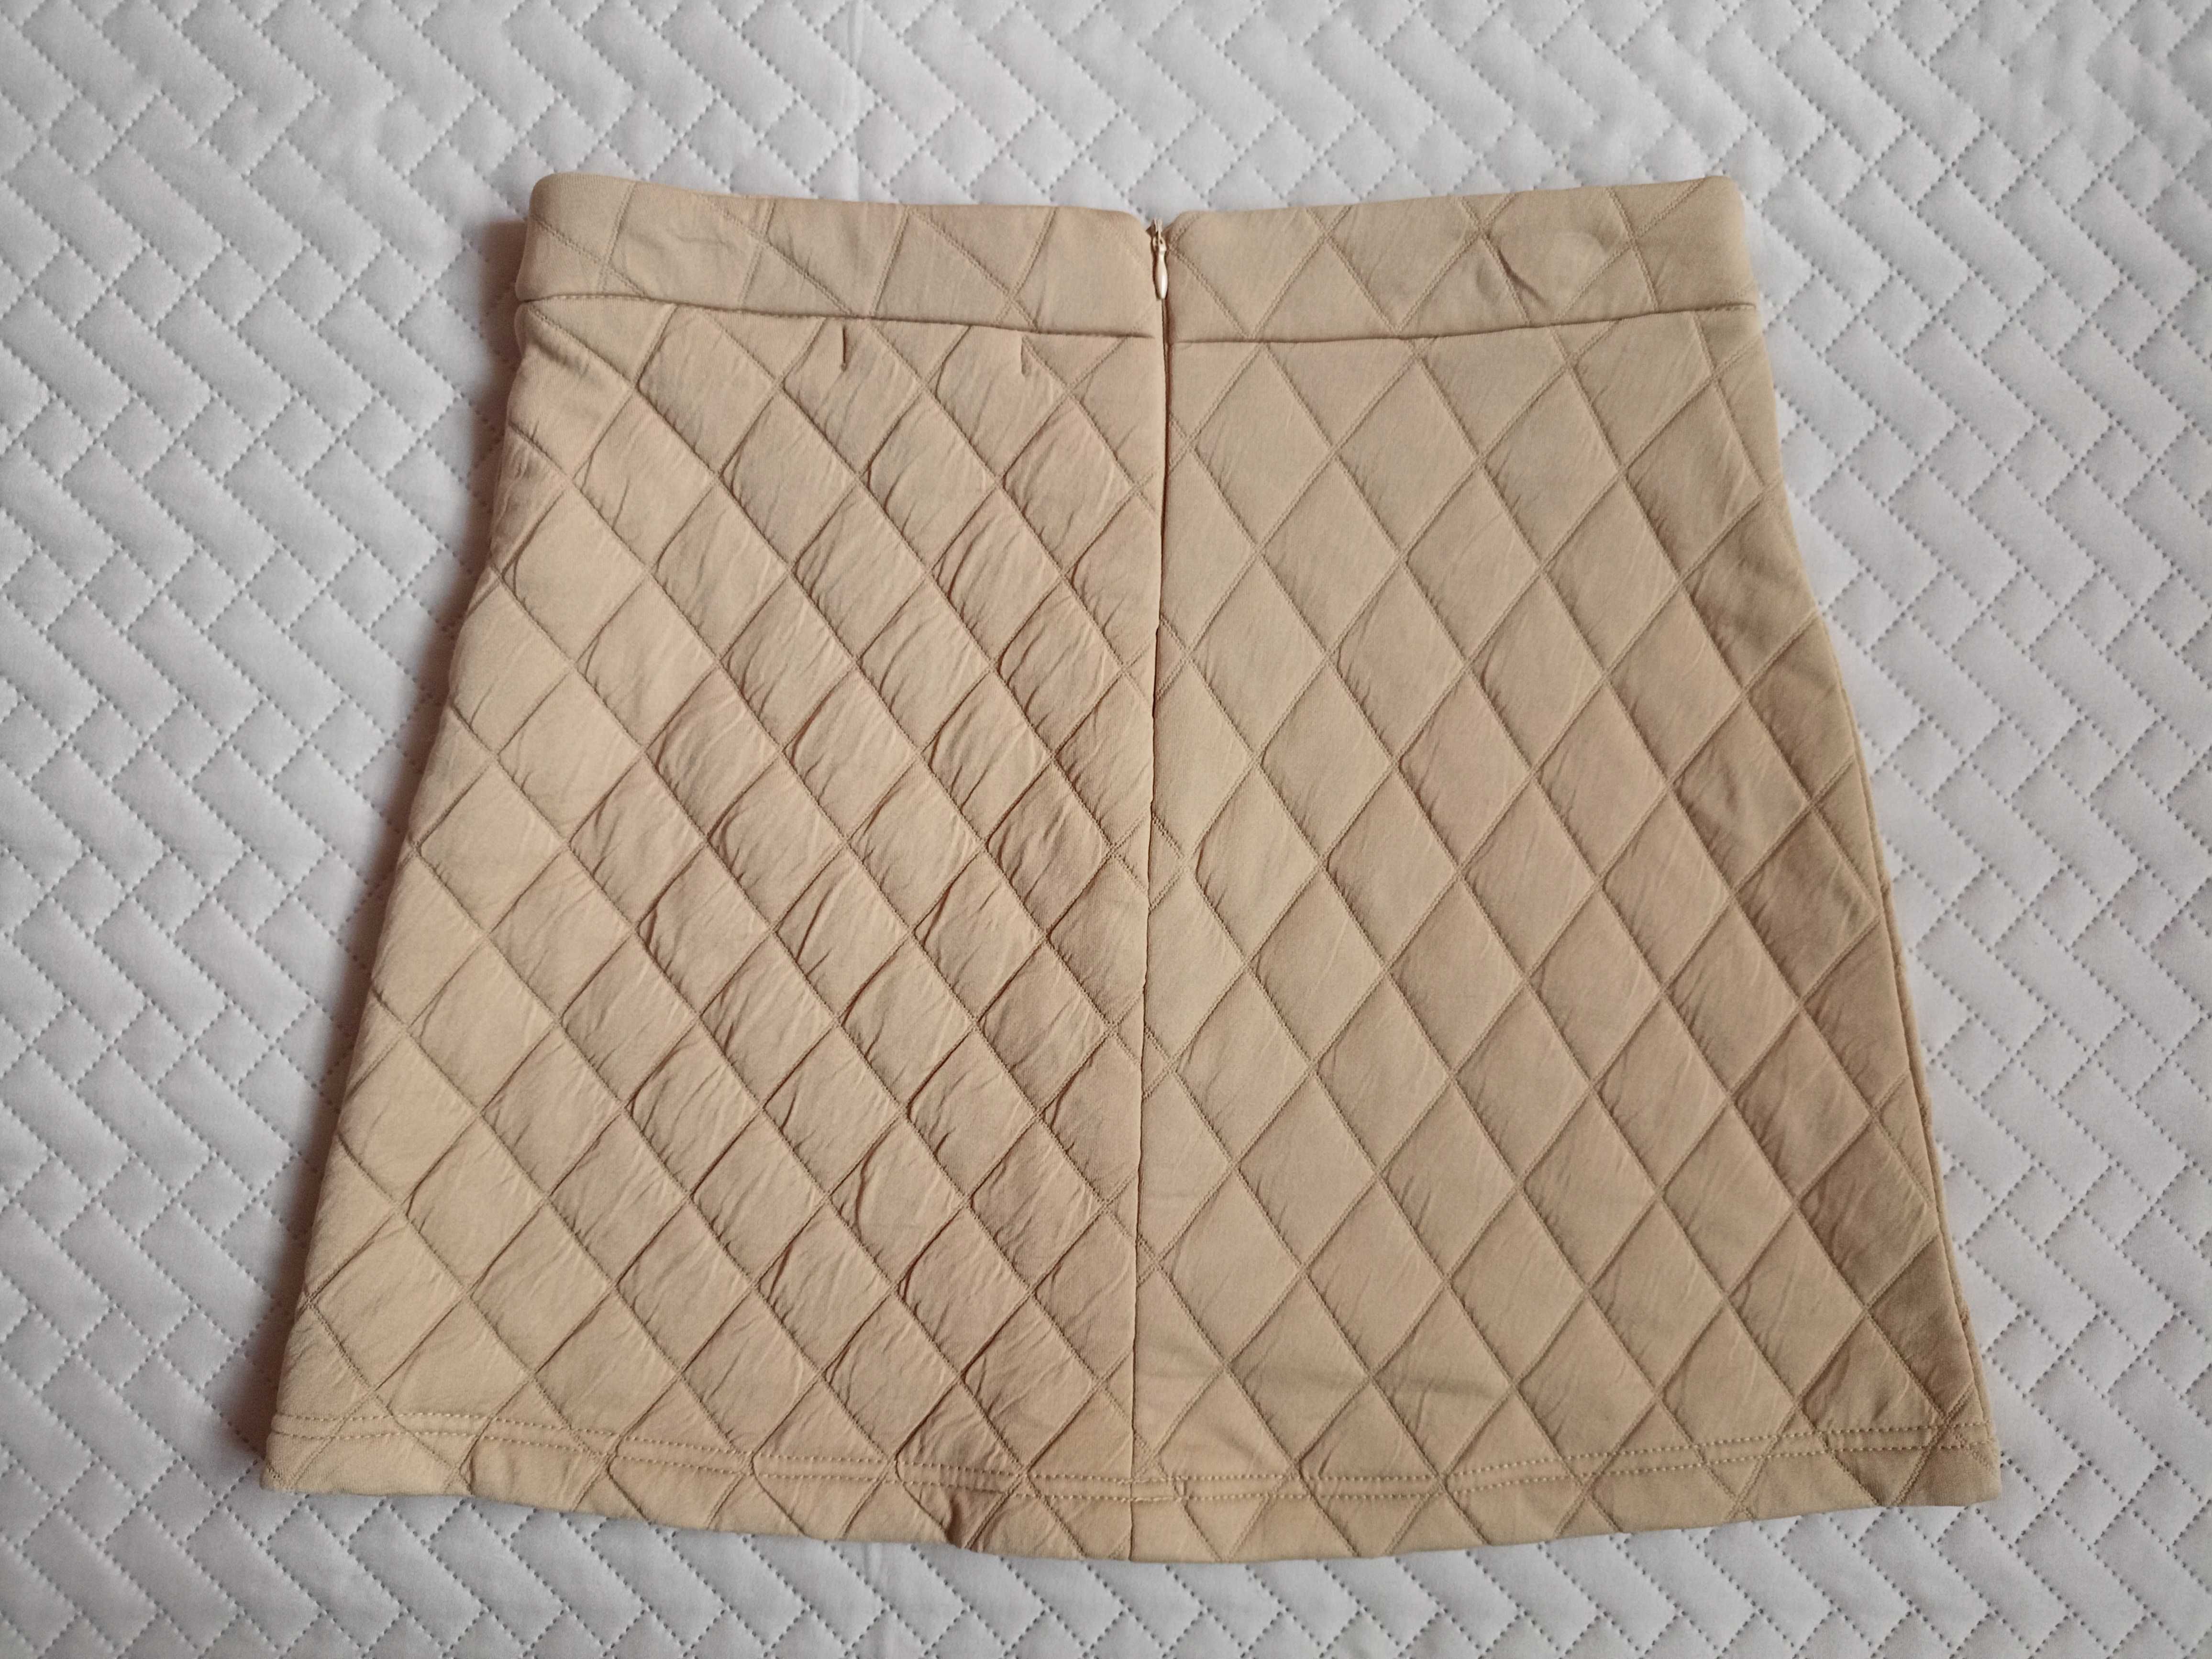 38 Primark Damska spódnica mini pikowana ciepła beżowa musztardowa